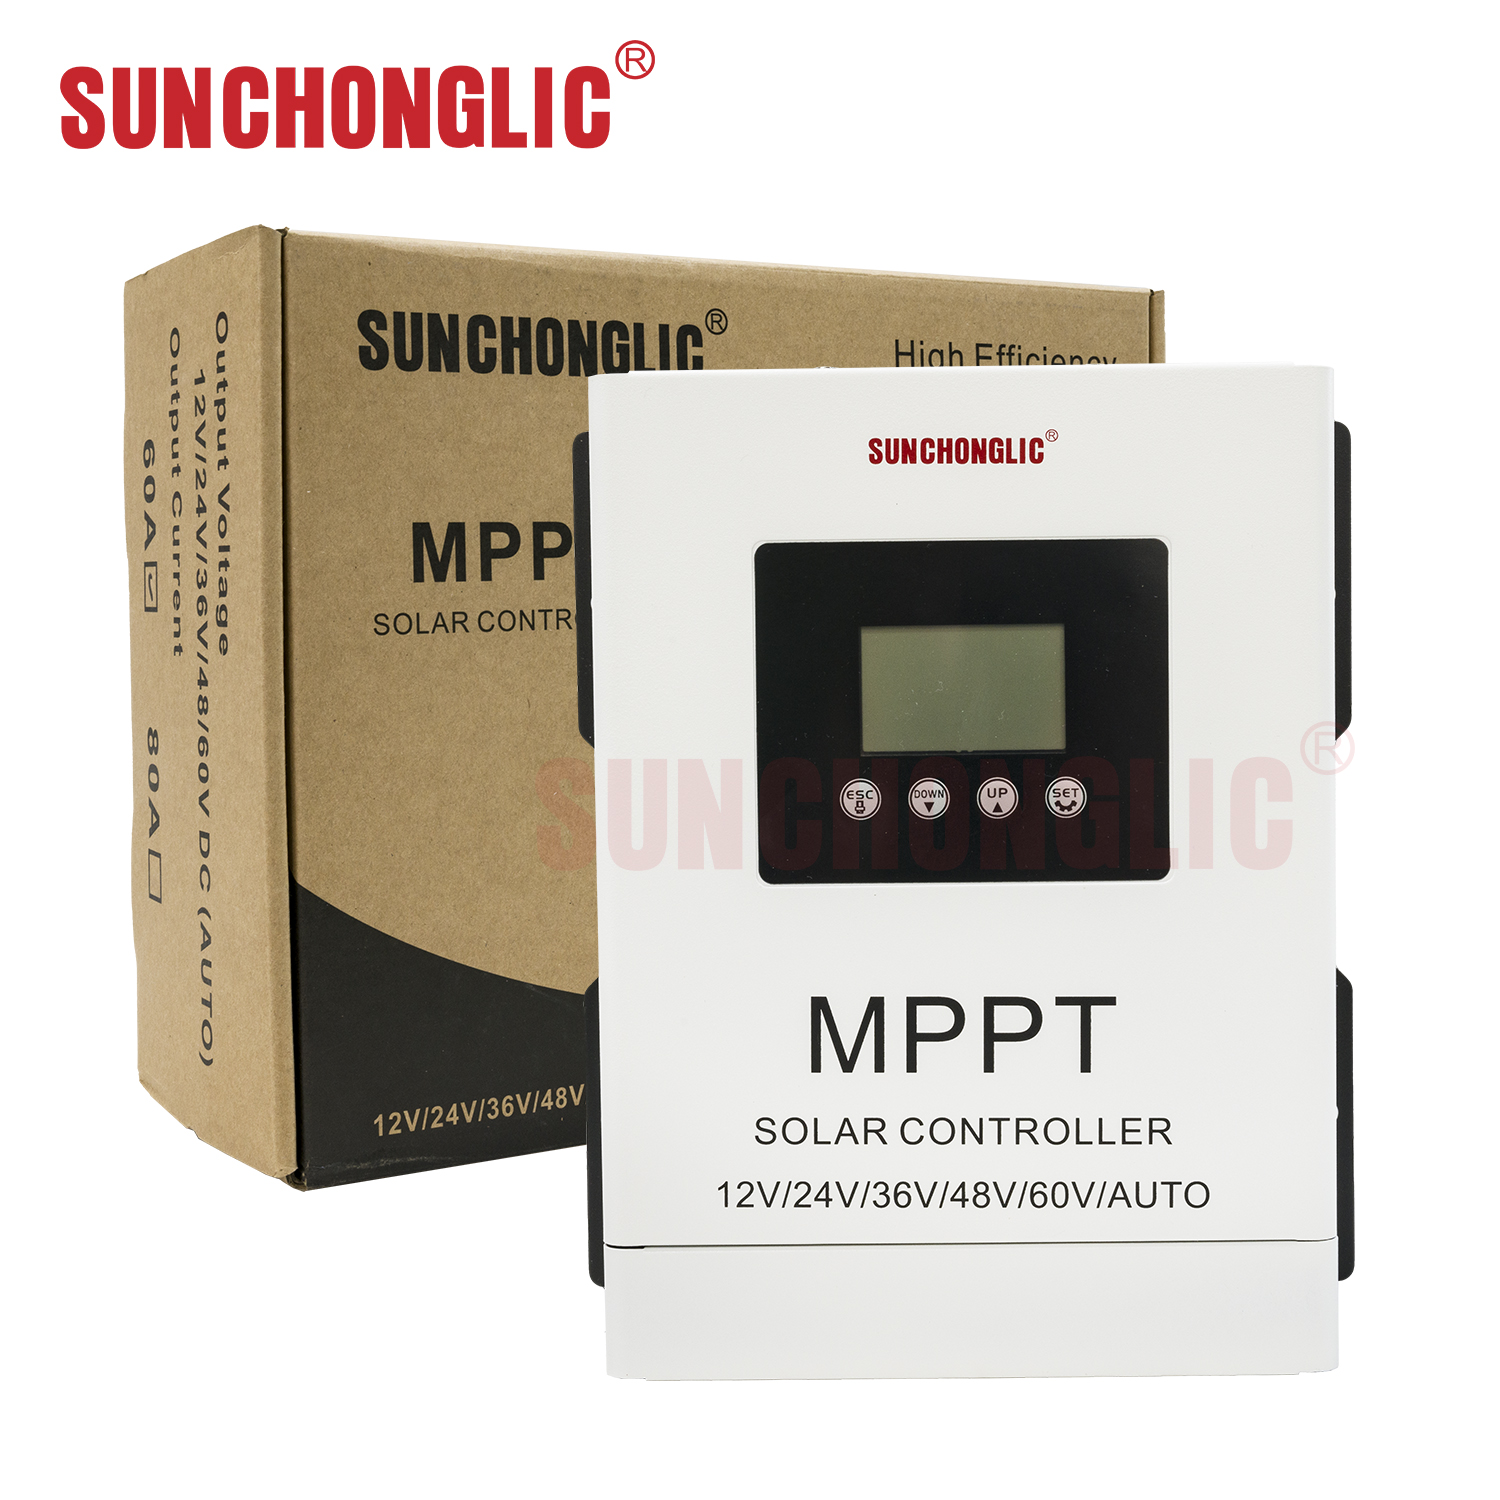 Sunchonglic 12v 24v 48v 60v auto 60A 60 amp charge controller Max PV 180V mppt solar charger controller